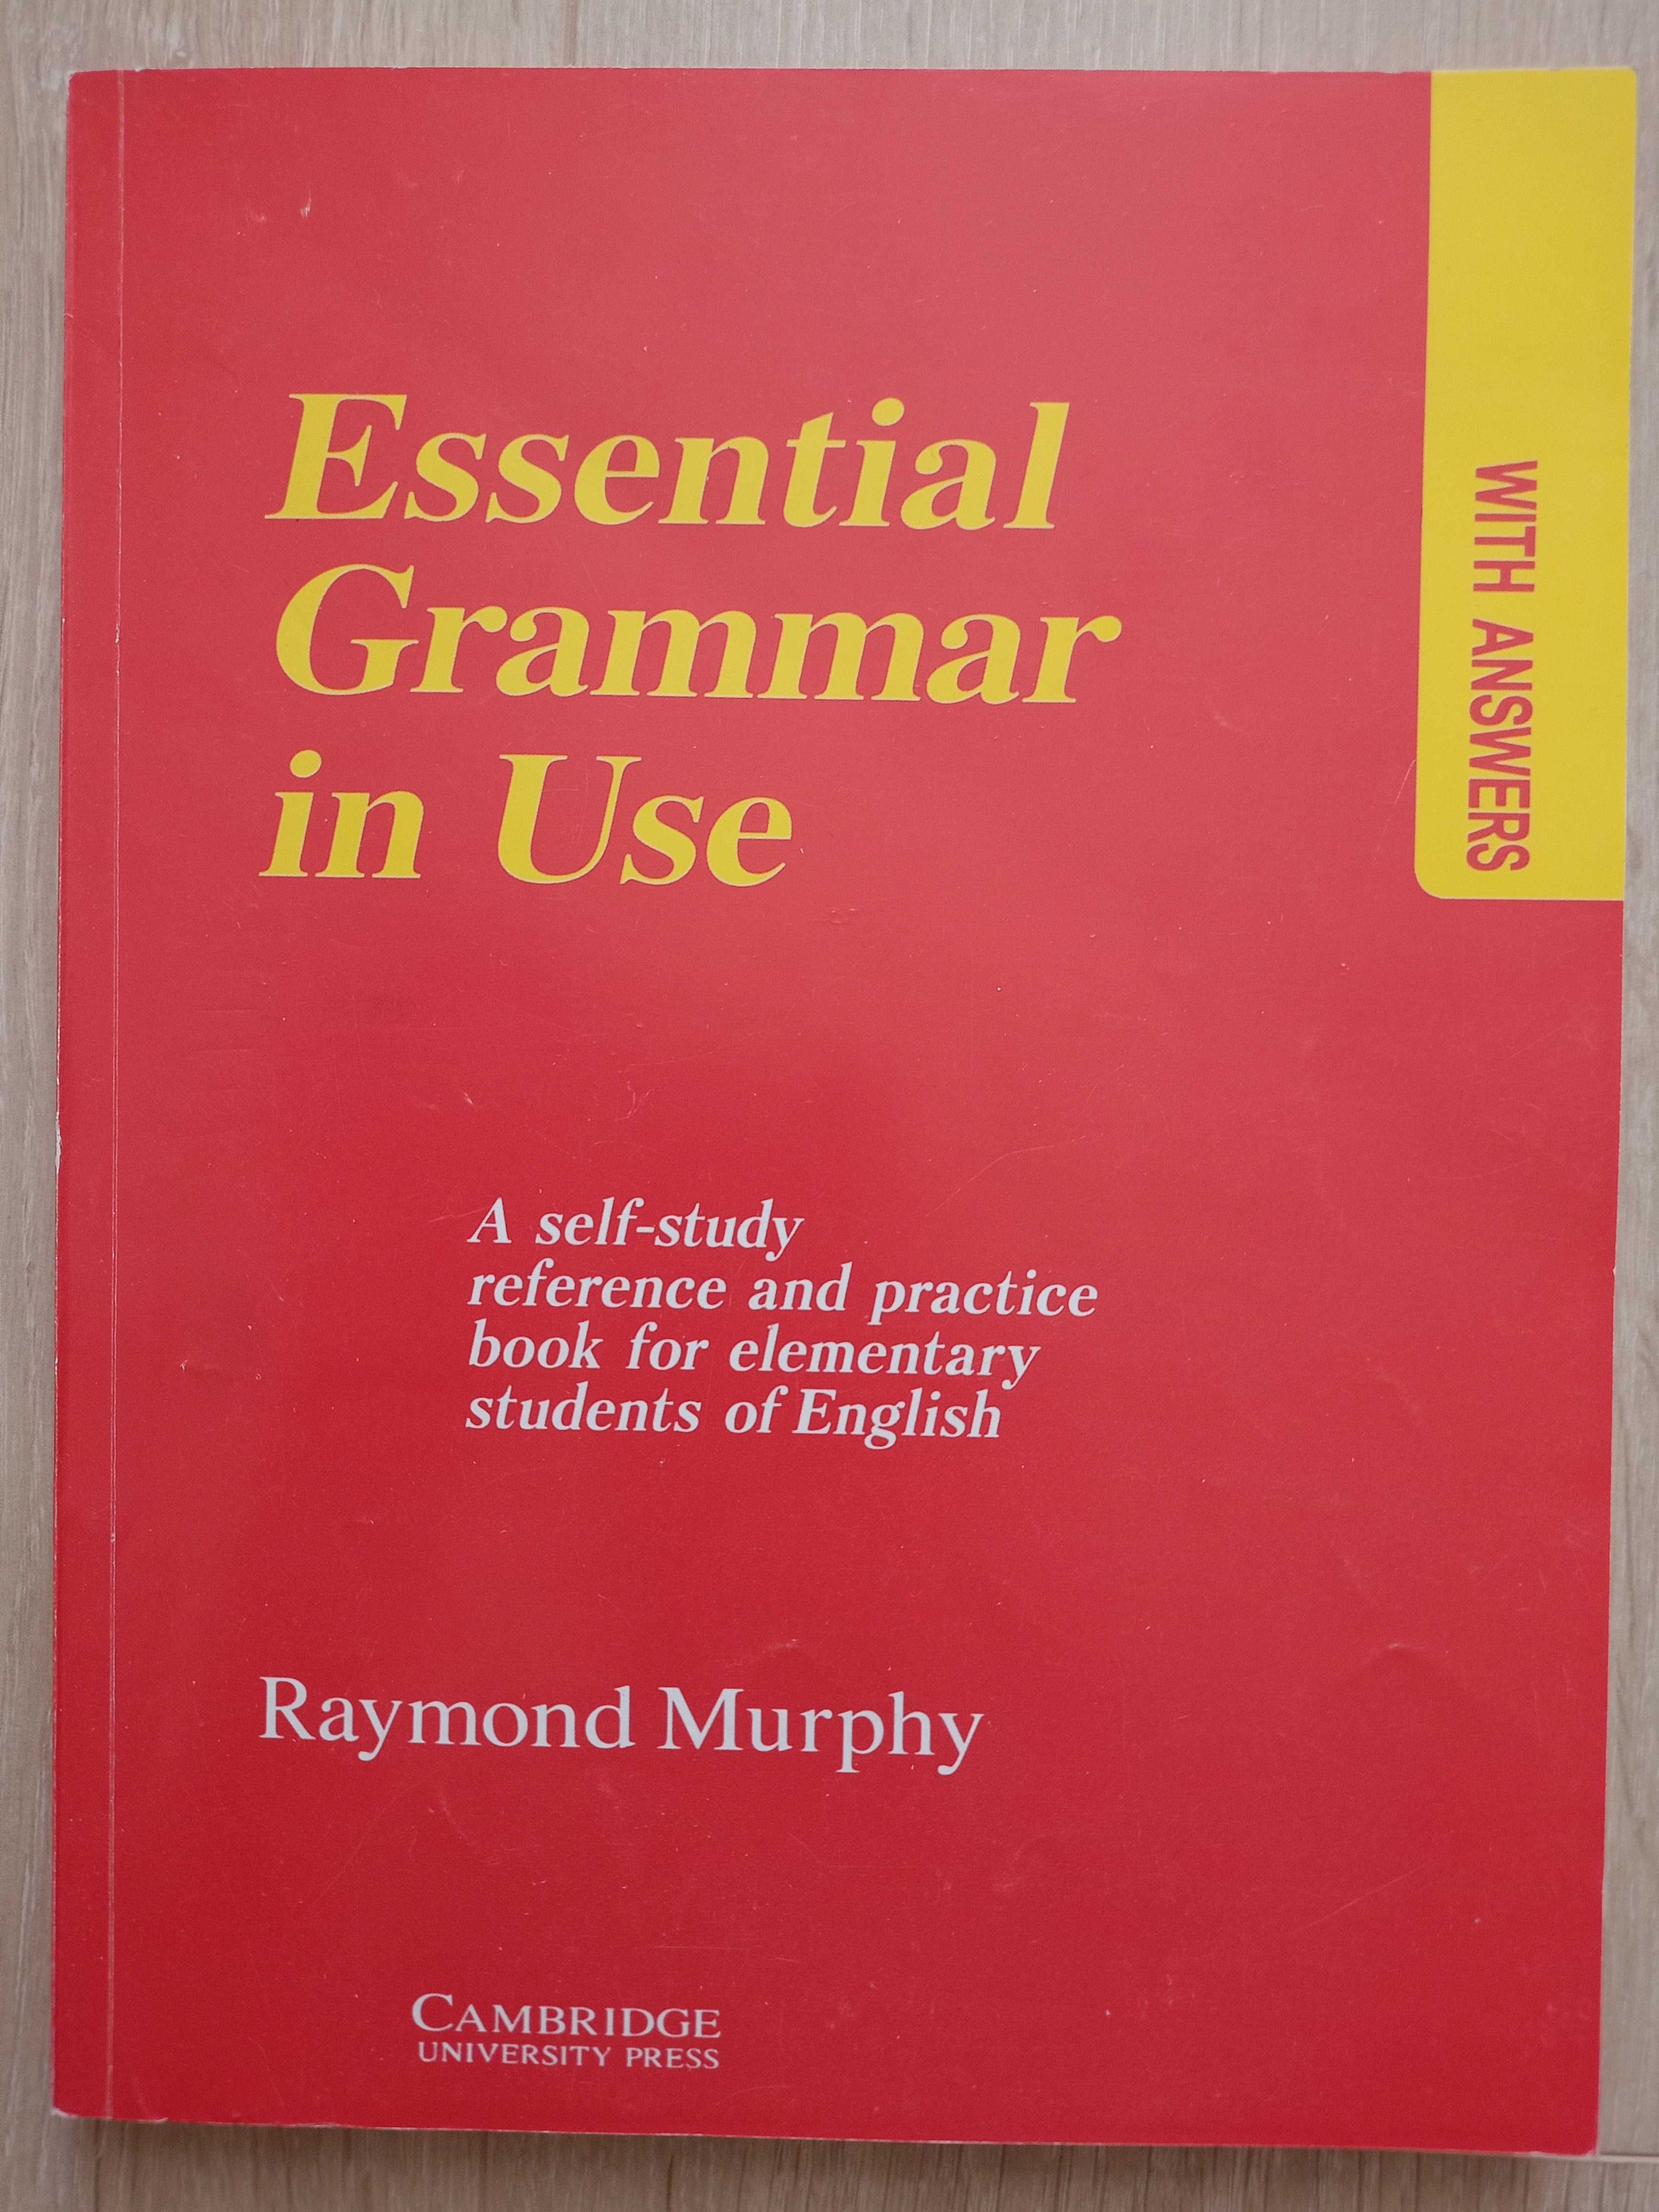 Учебник английского языка - Граматика